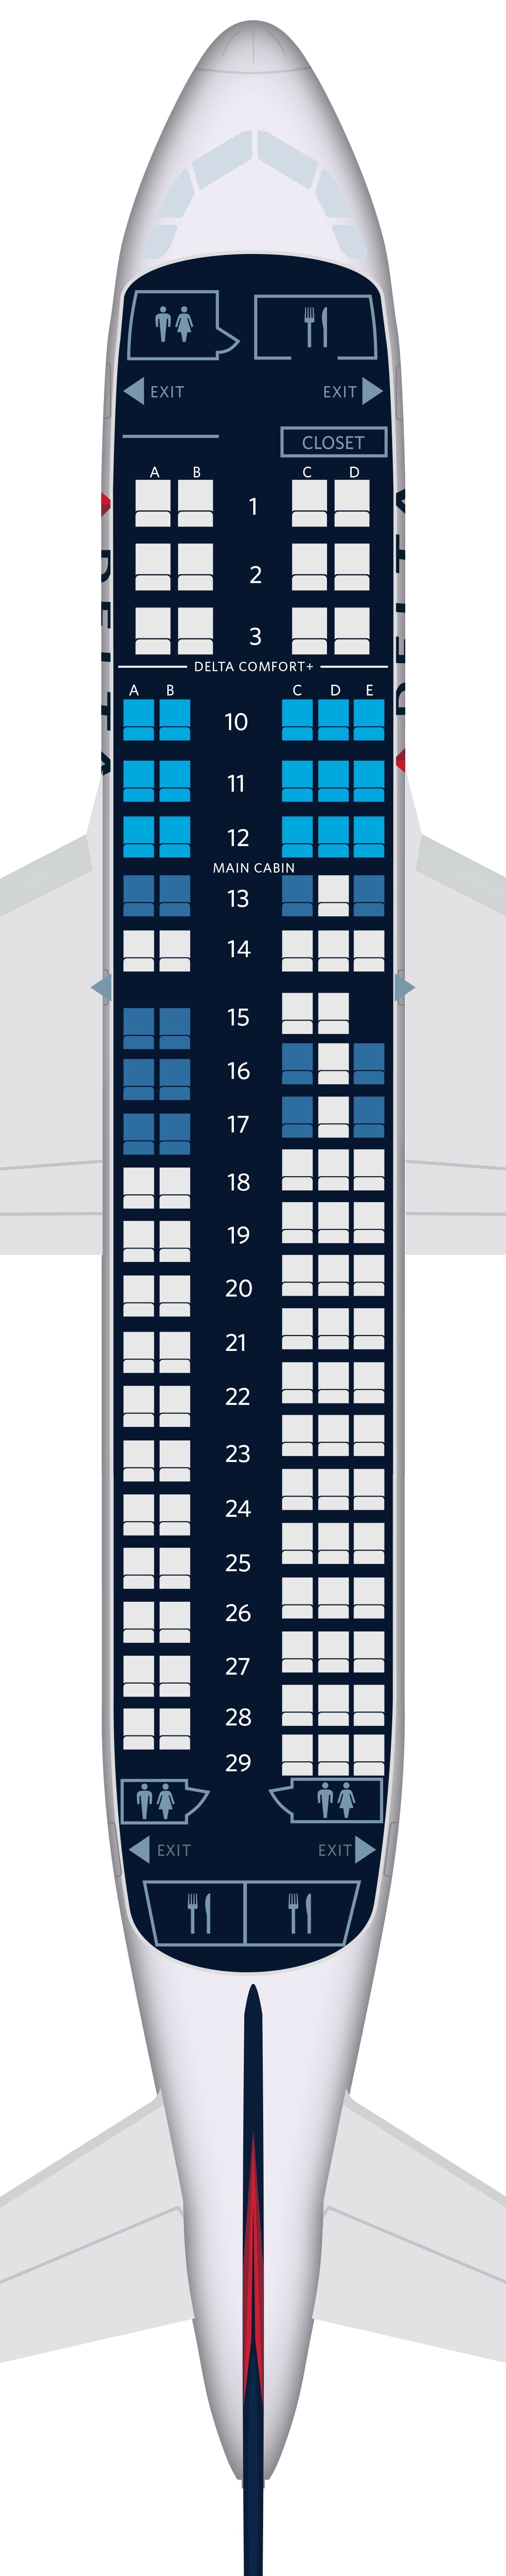 bk2931航班座位图图片